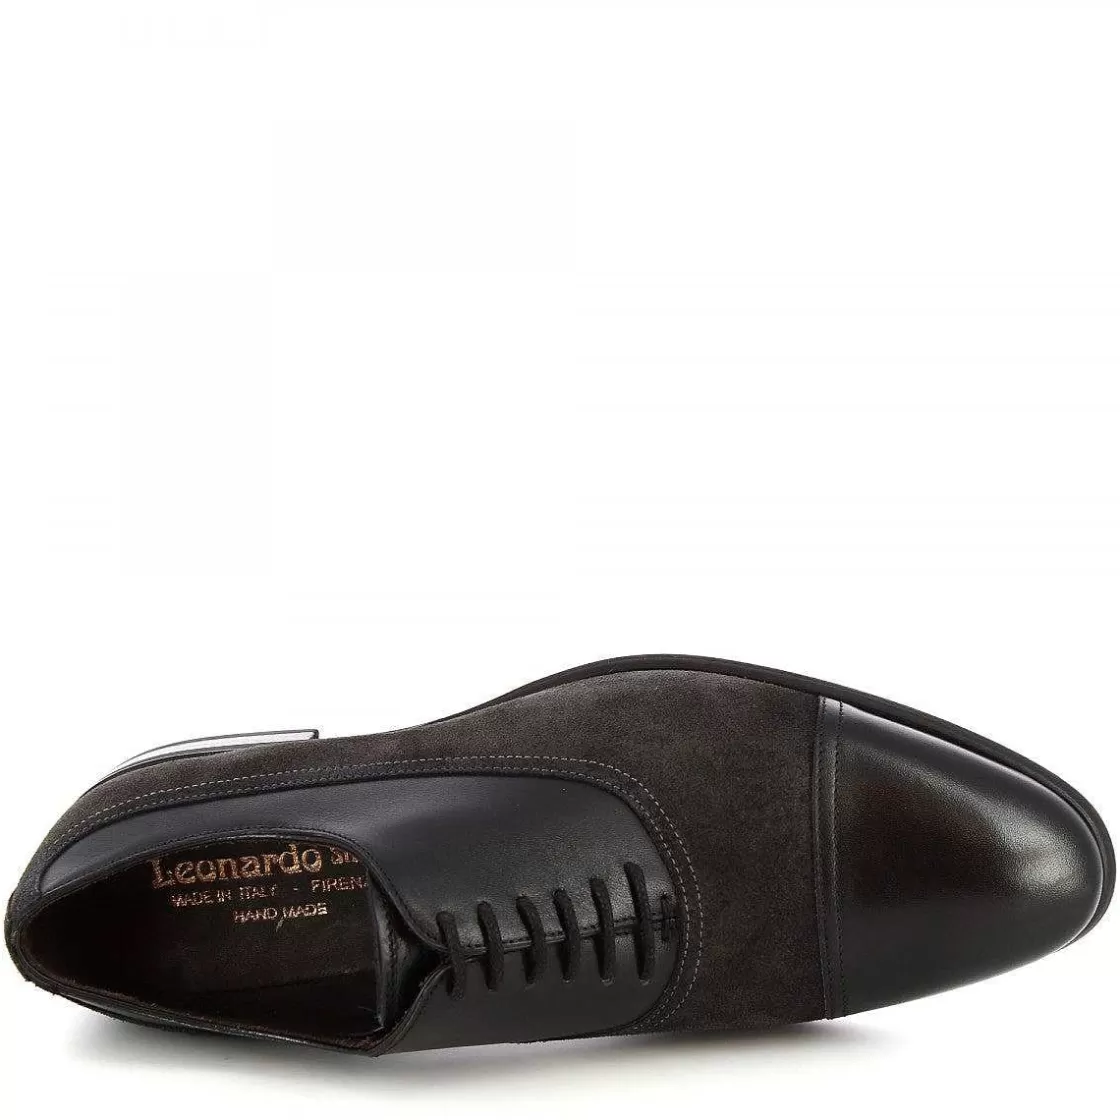 Leonardo Handmade Oxford Shoes For Men In Black Calfskin And Suede Hot